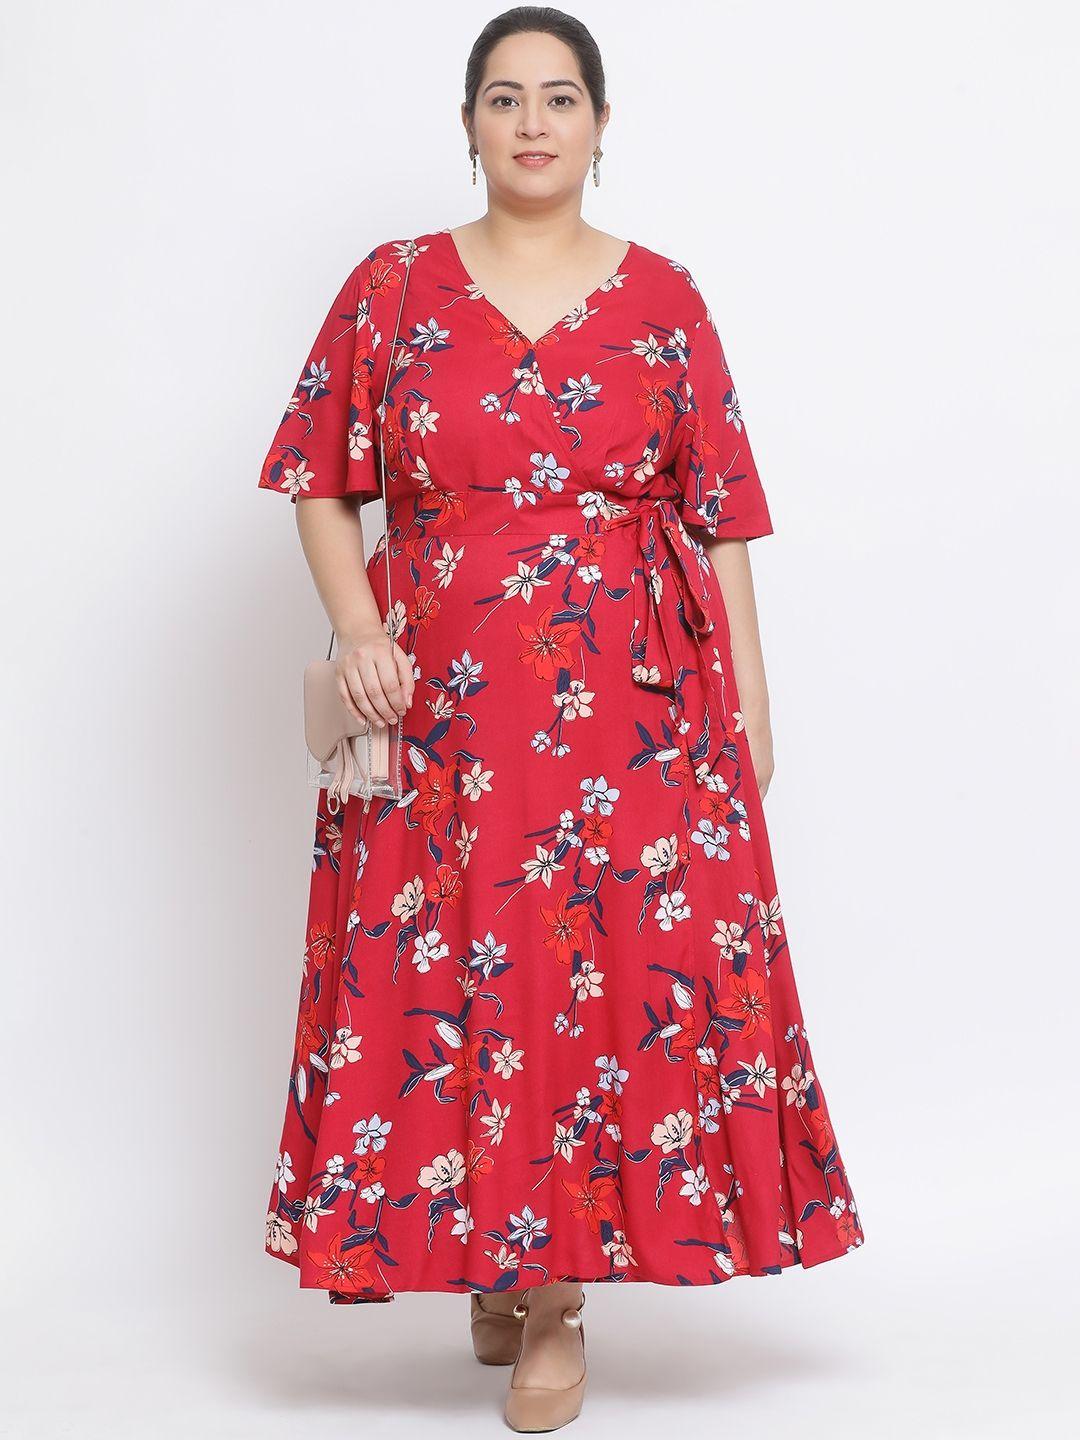 oxolloxo women coral red & white floral print plus size maxi wrap dress